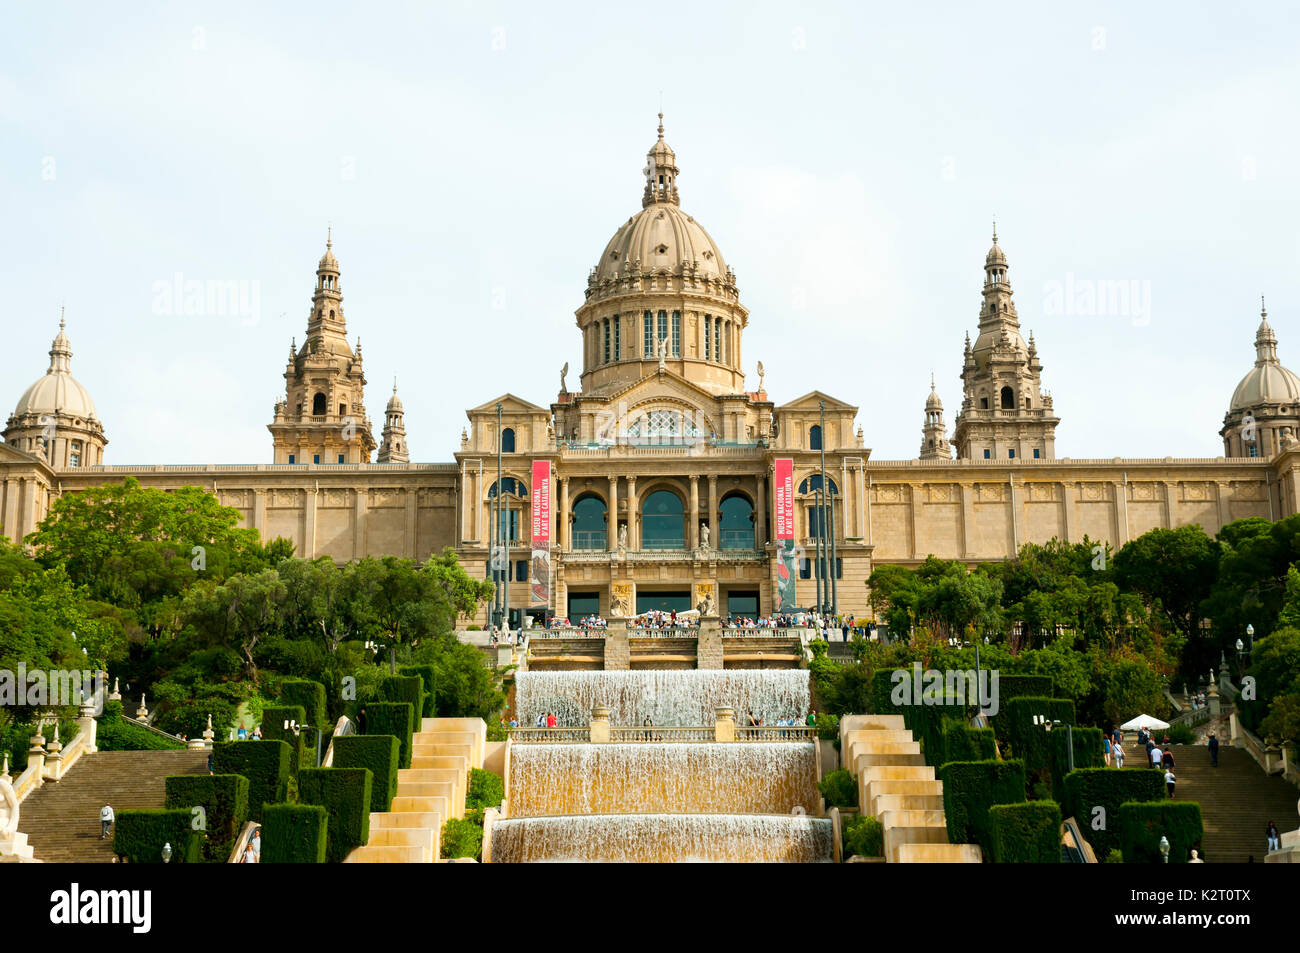 National Art Museum of Catalonia - Barcelona - Spain Stock Photo